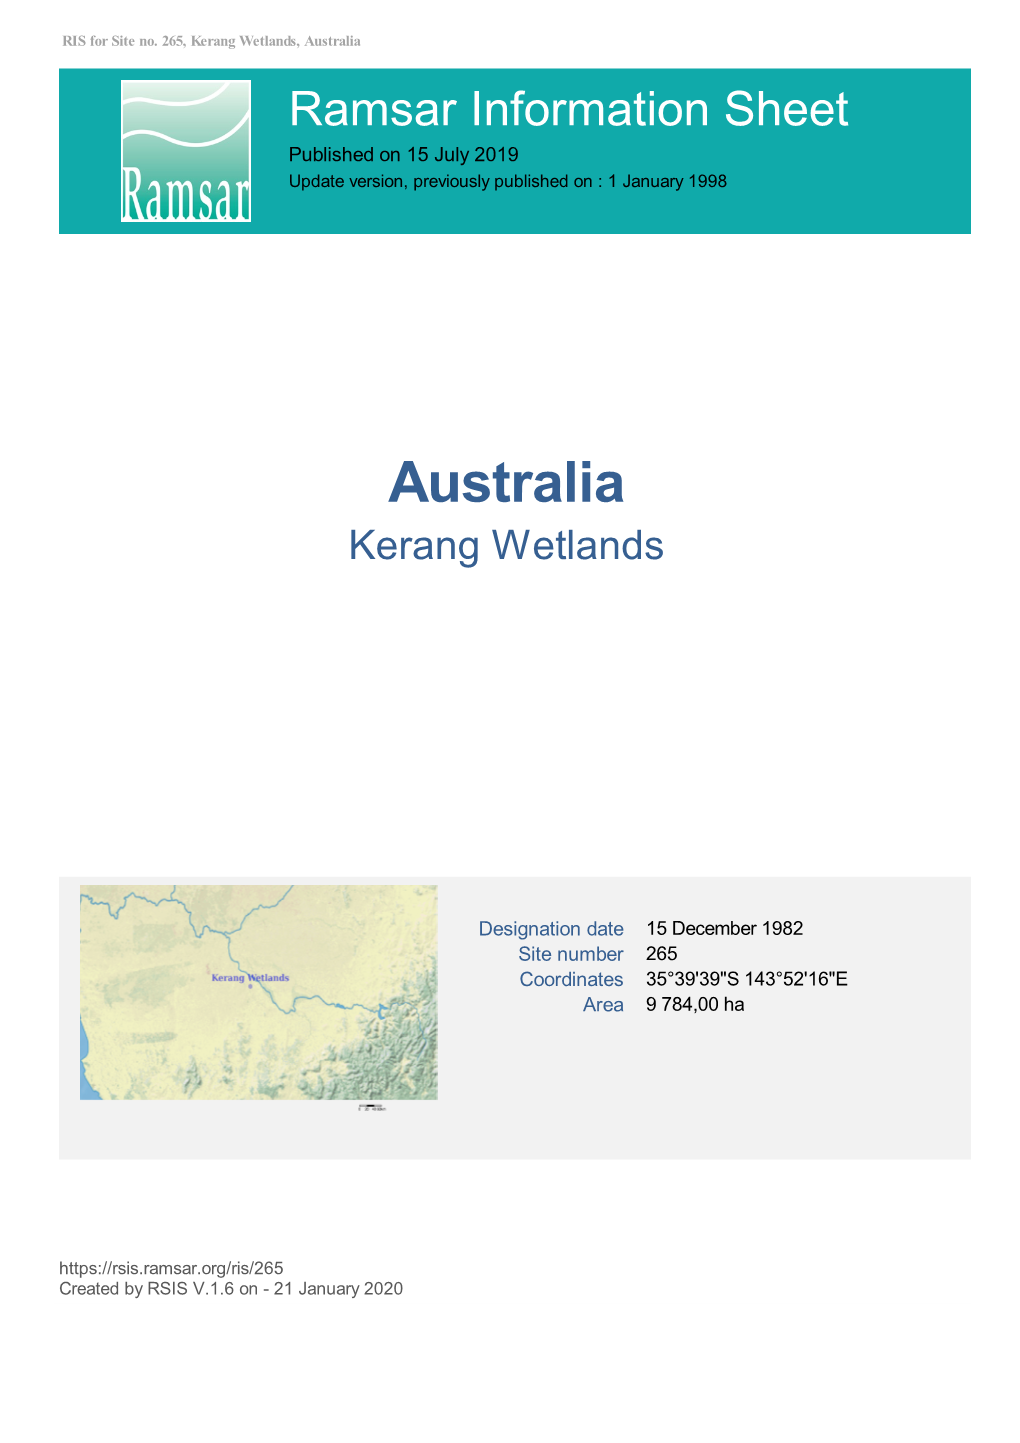 Kerang Wetlands Ramsar Information Sheet